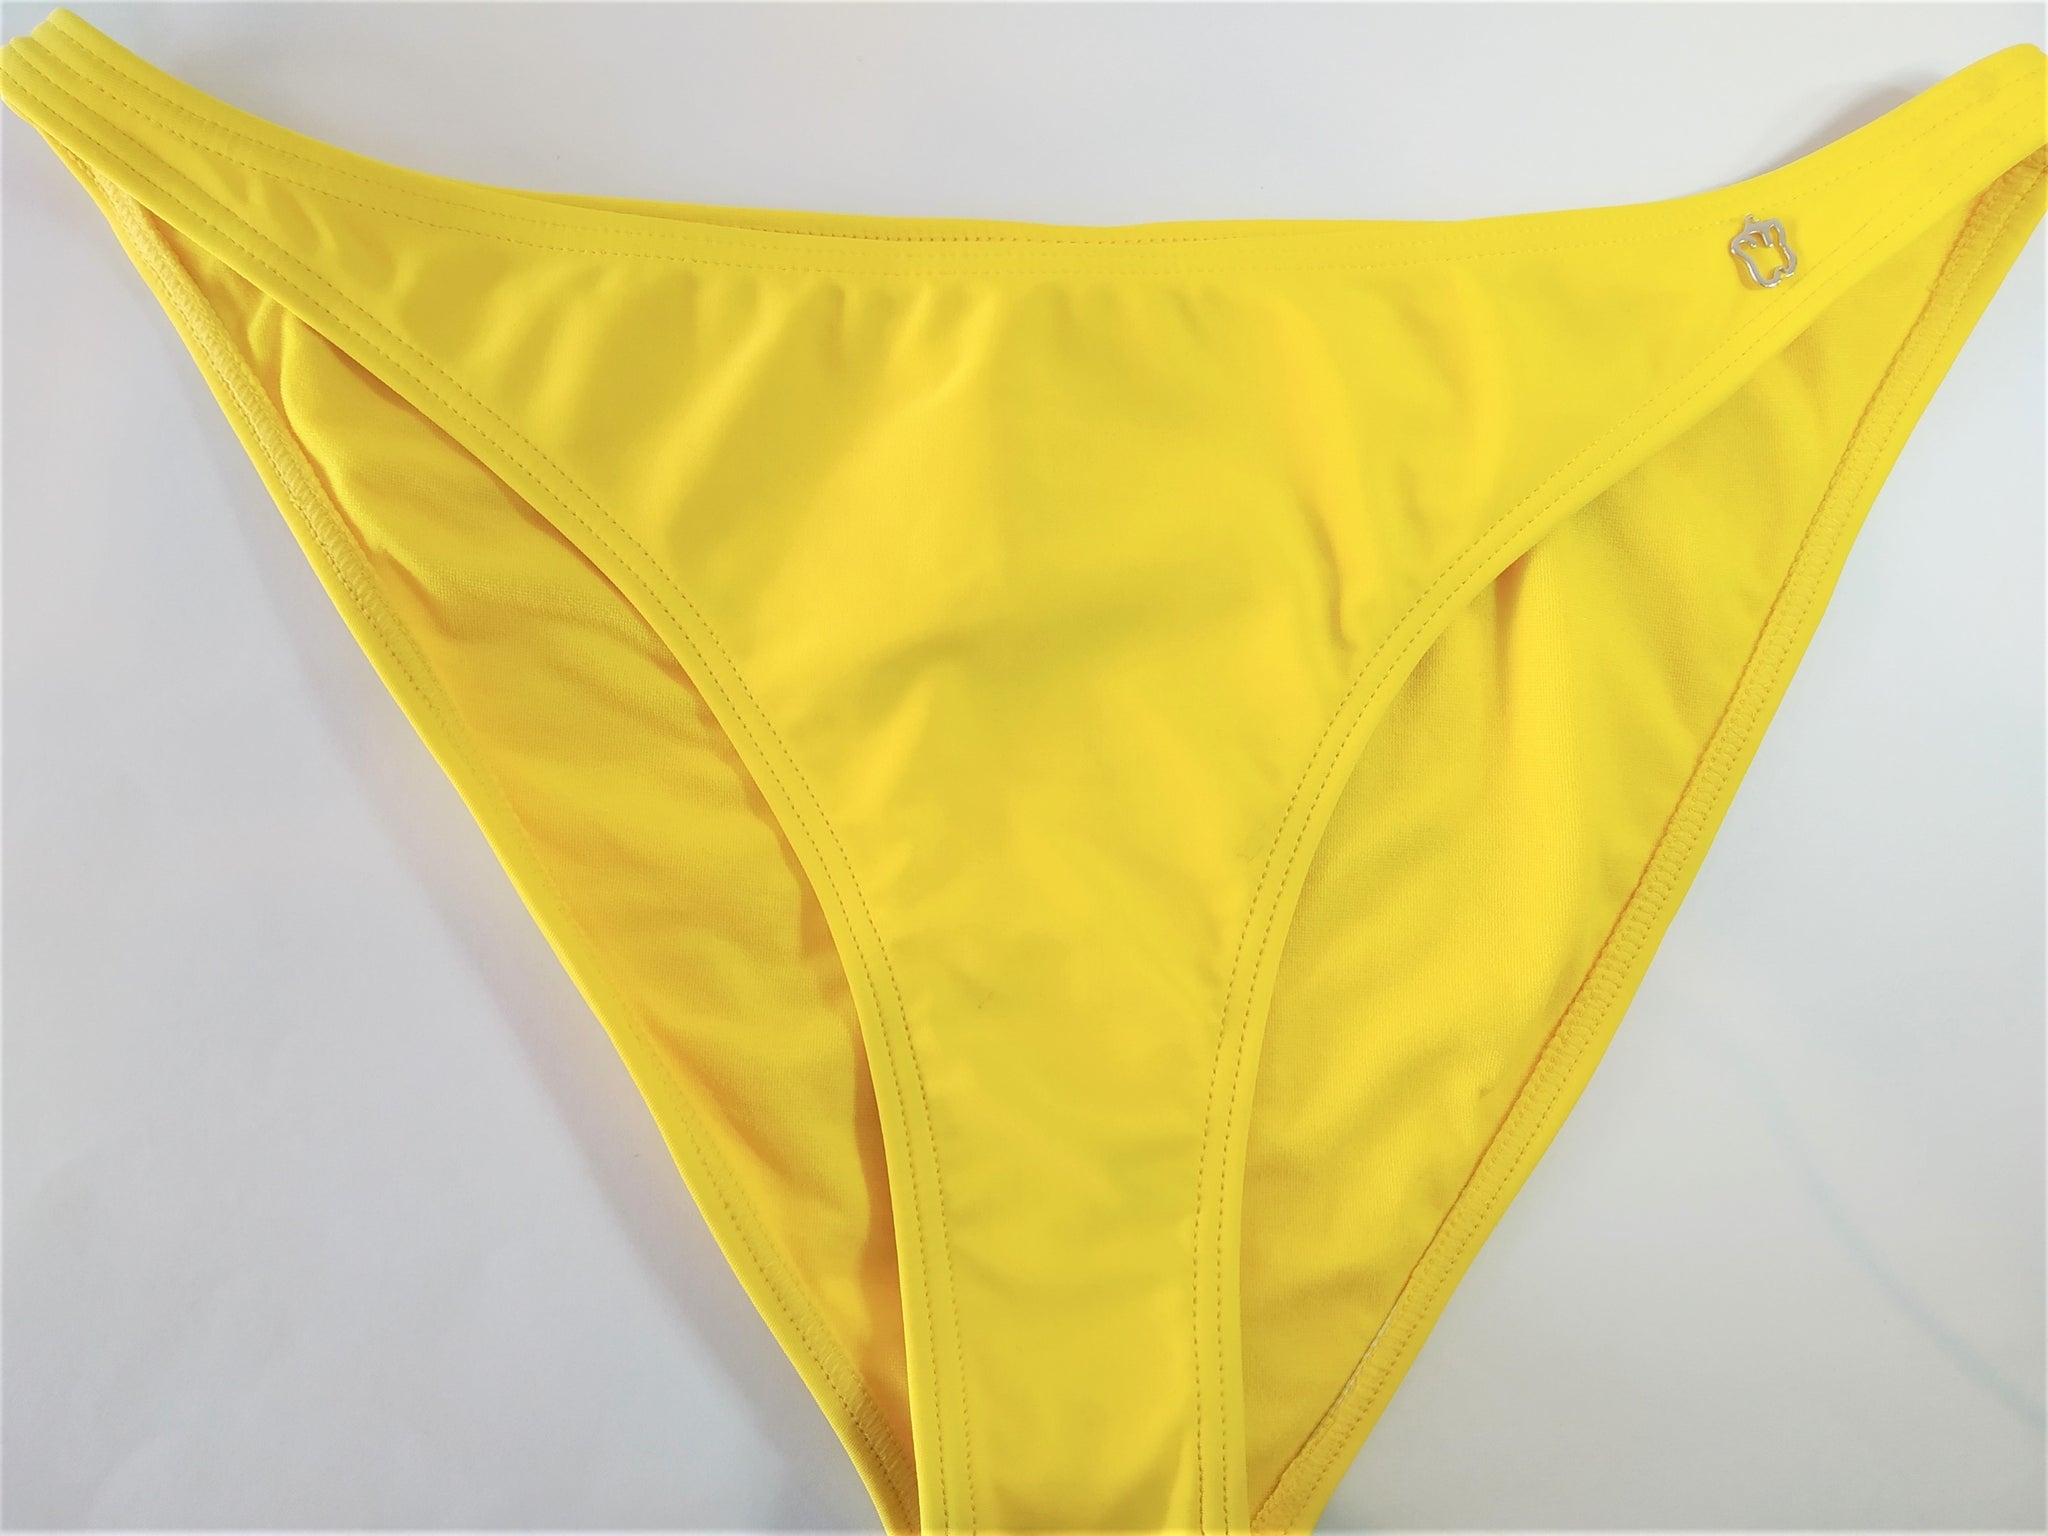 bikinn,classic solid color bikini yellow bottom,swimsuit panty, high leg bikini bottom, culotte jaune de maillot de bain,traje de baño amarillo bragas ajuste normal